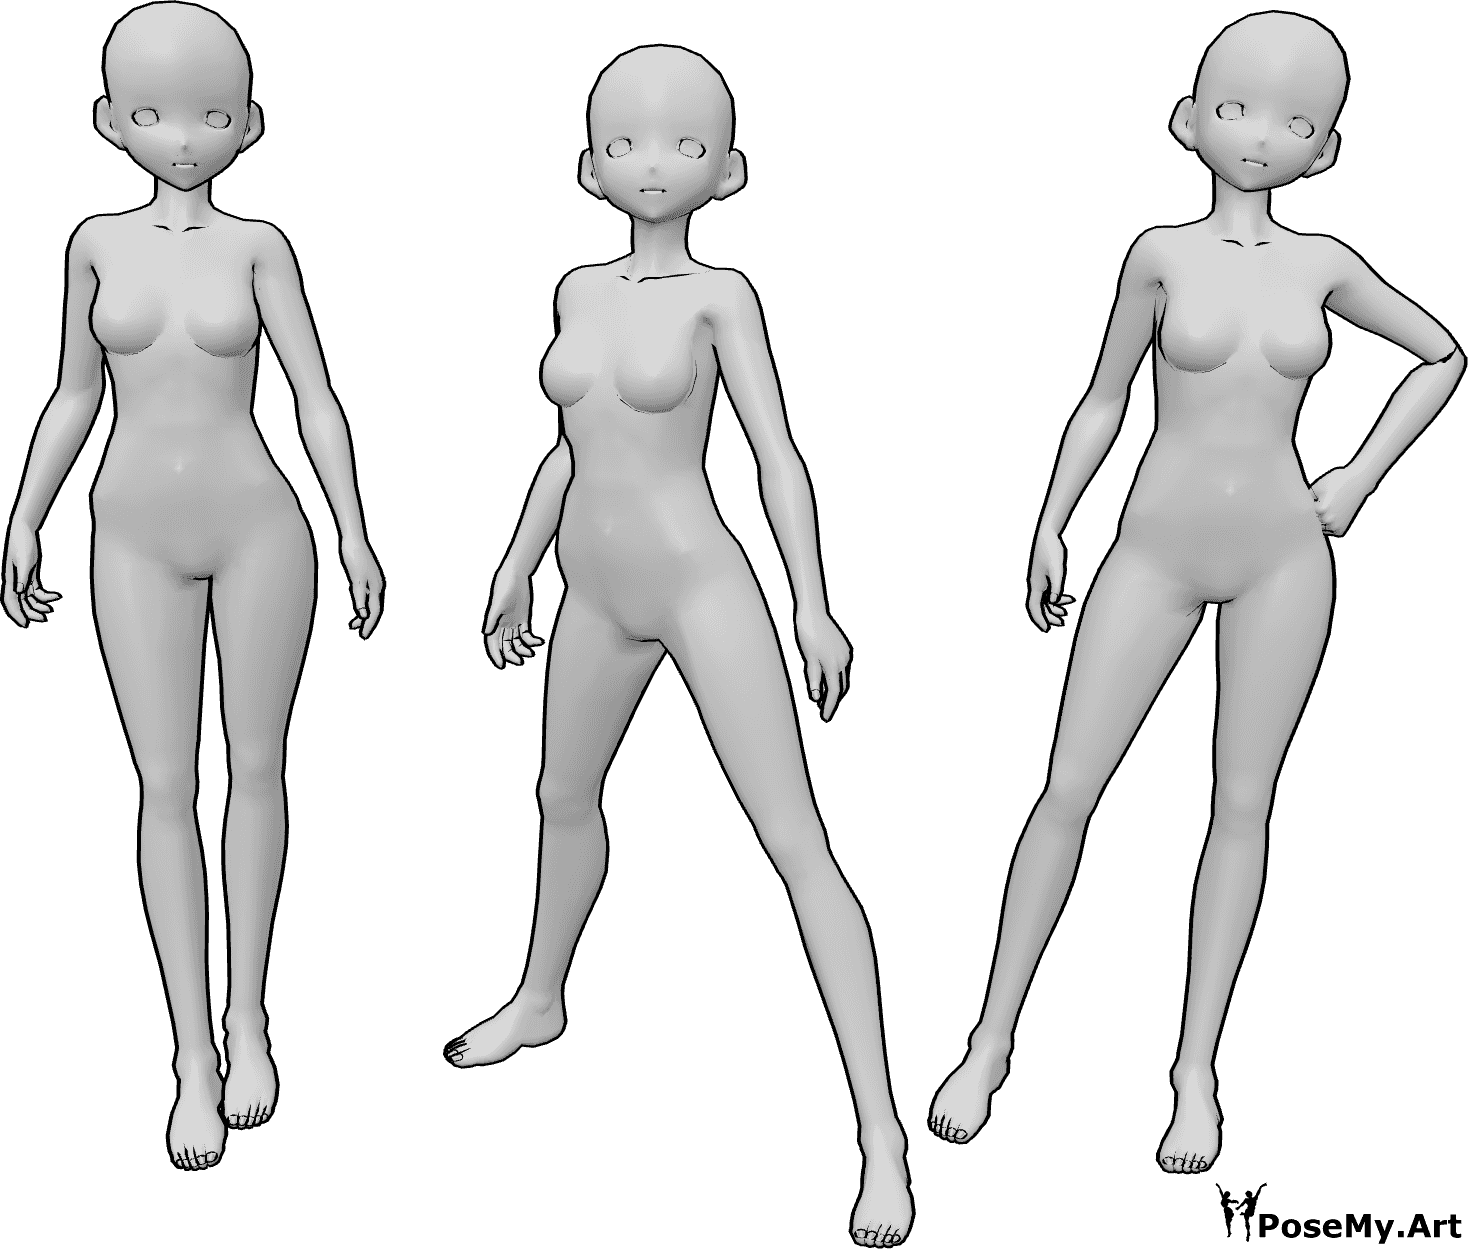 Female Anime Body Base - Three anime females pose